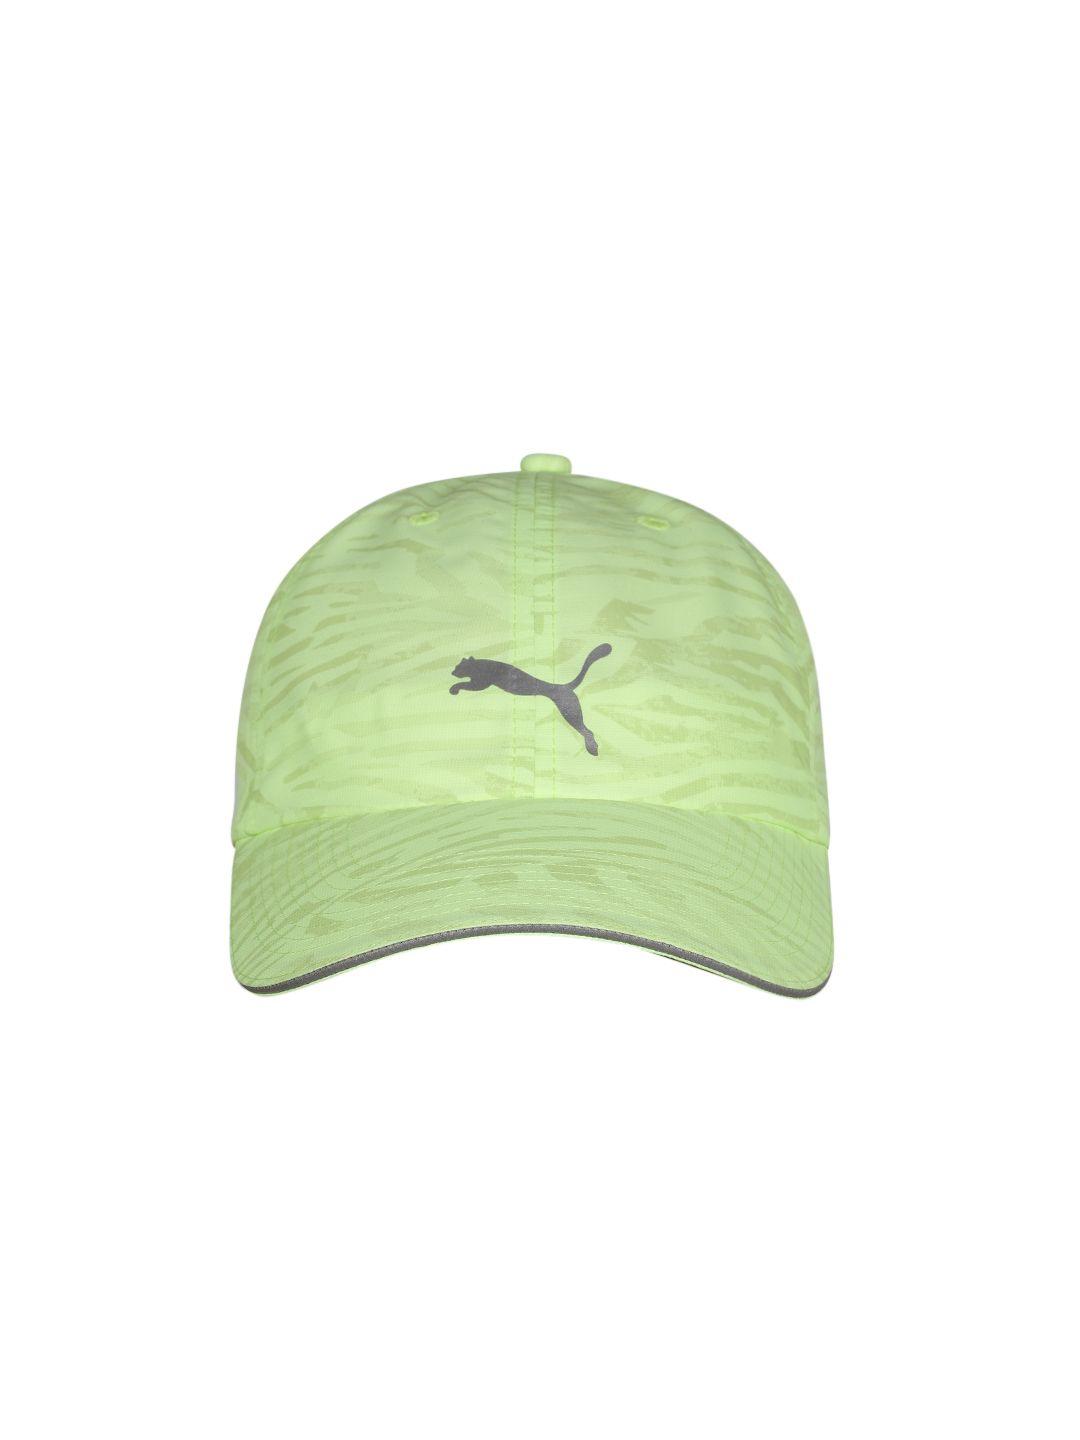 puma unisex lime green printed snapback cap